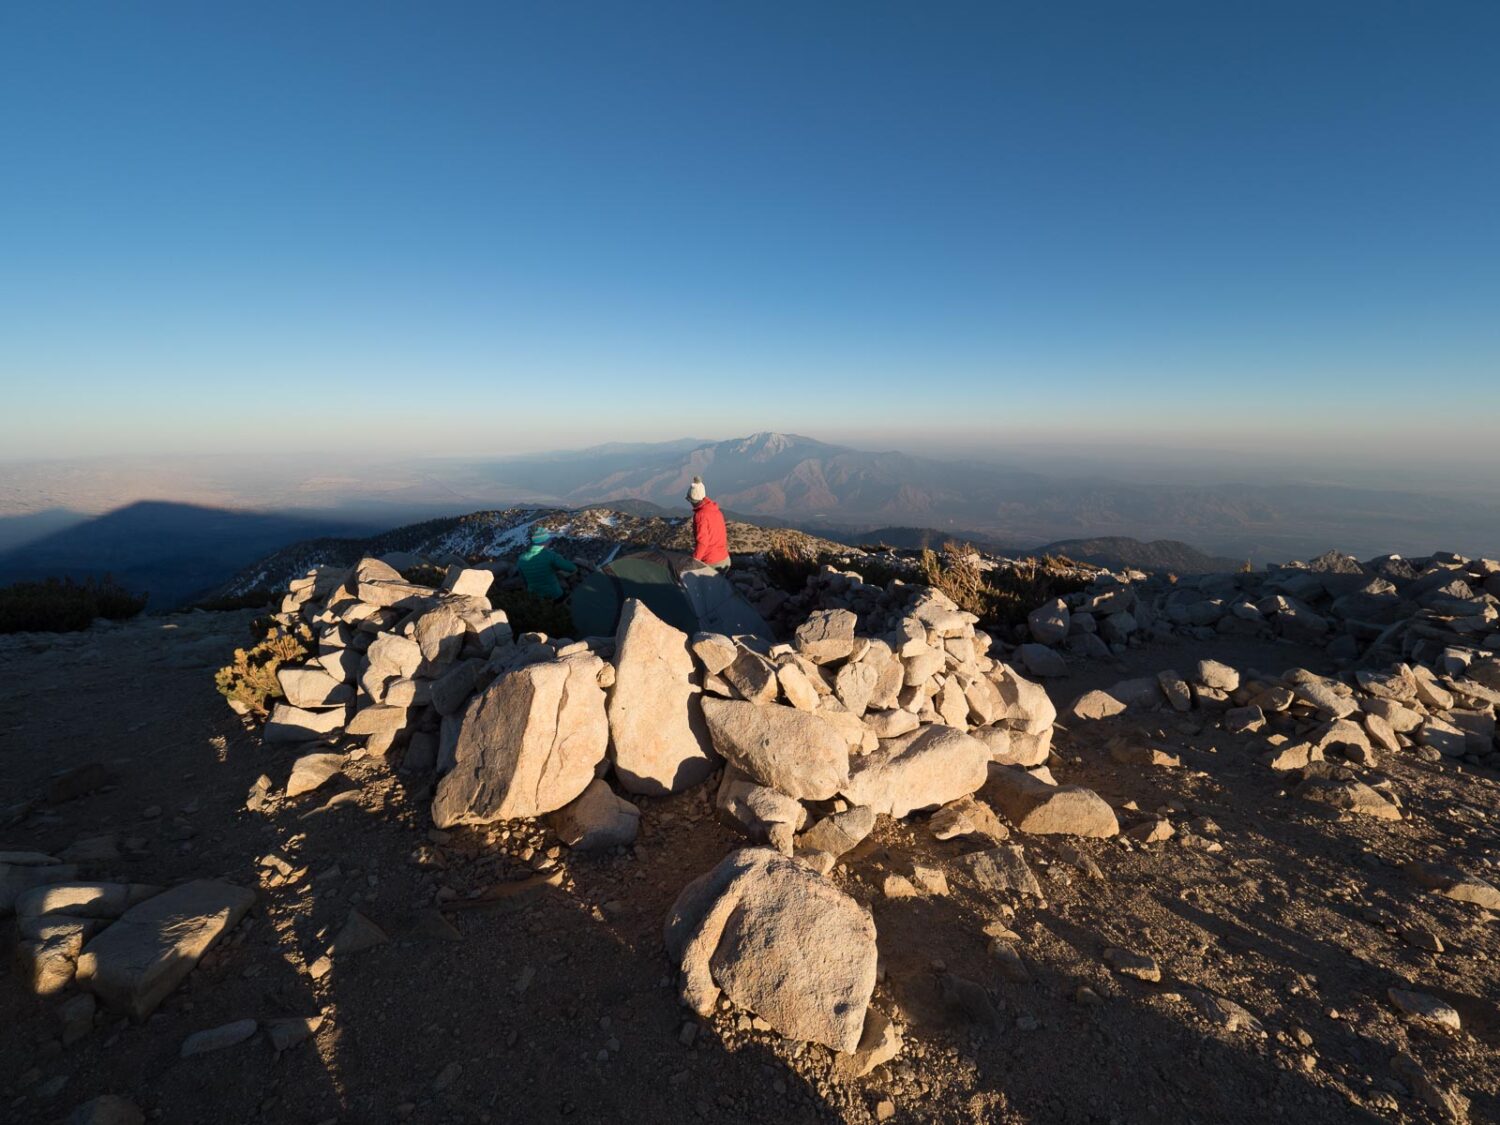 San Gorgonio Peak